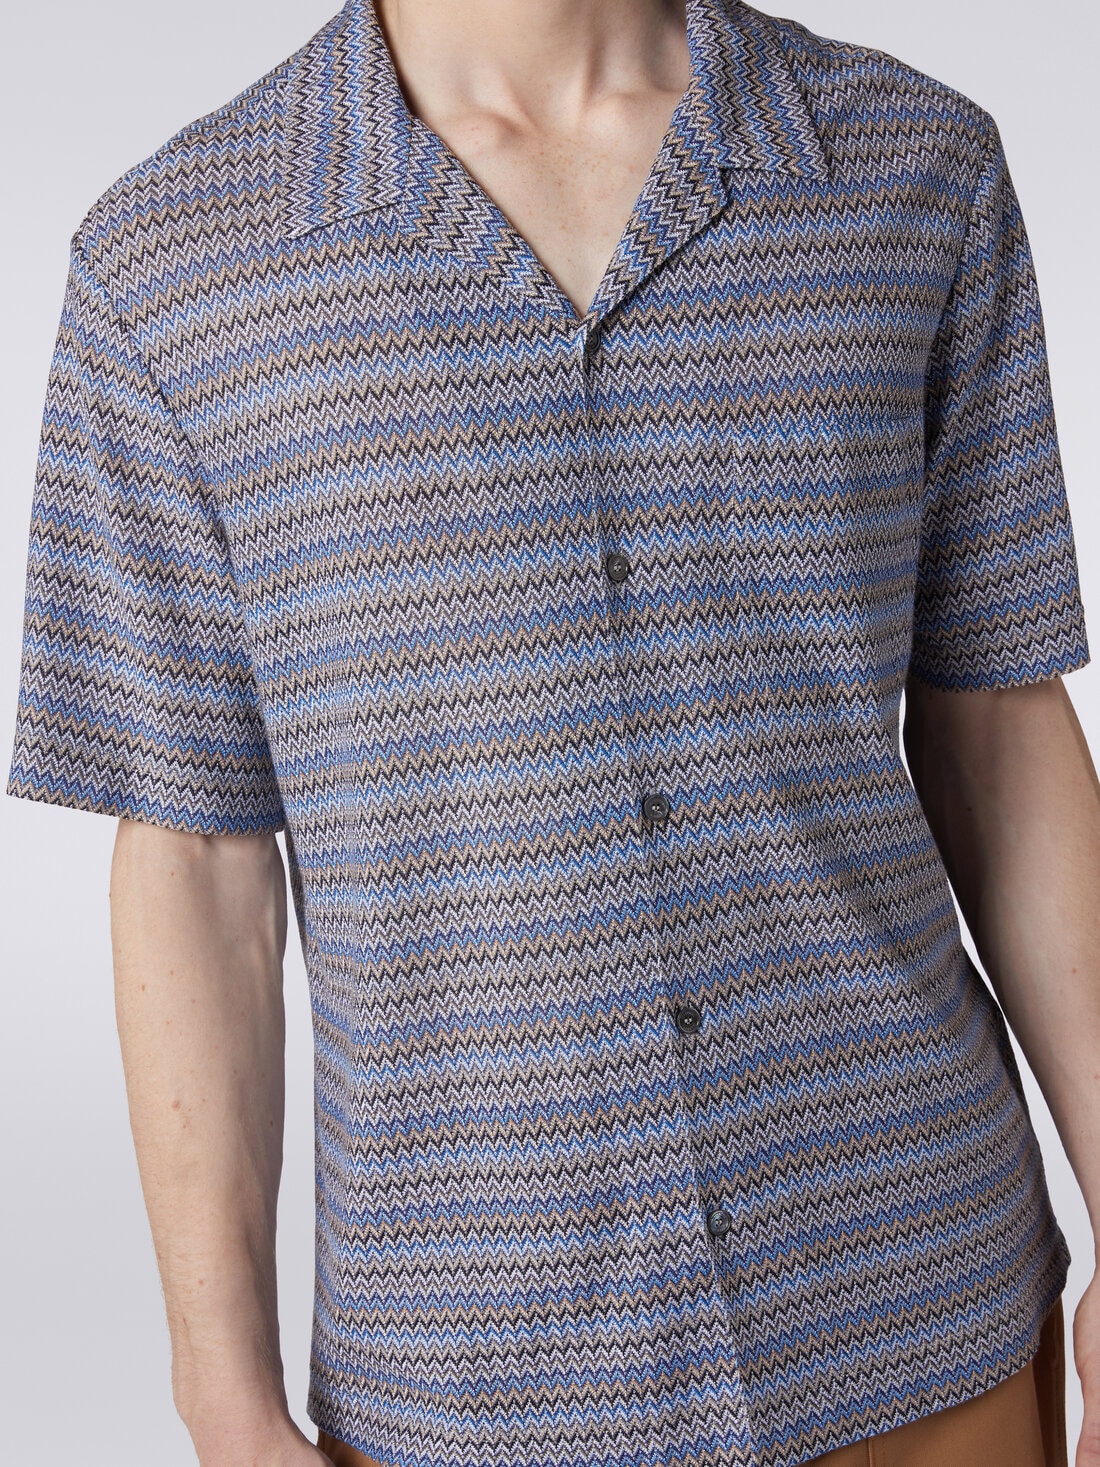 Short-sleeved zigzag bowling shirt, Blue - US24SJ09BR00U6S72D2 - 4